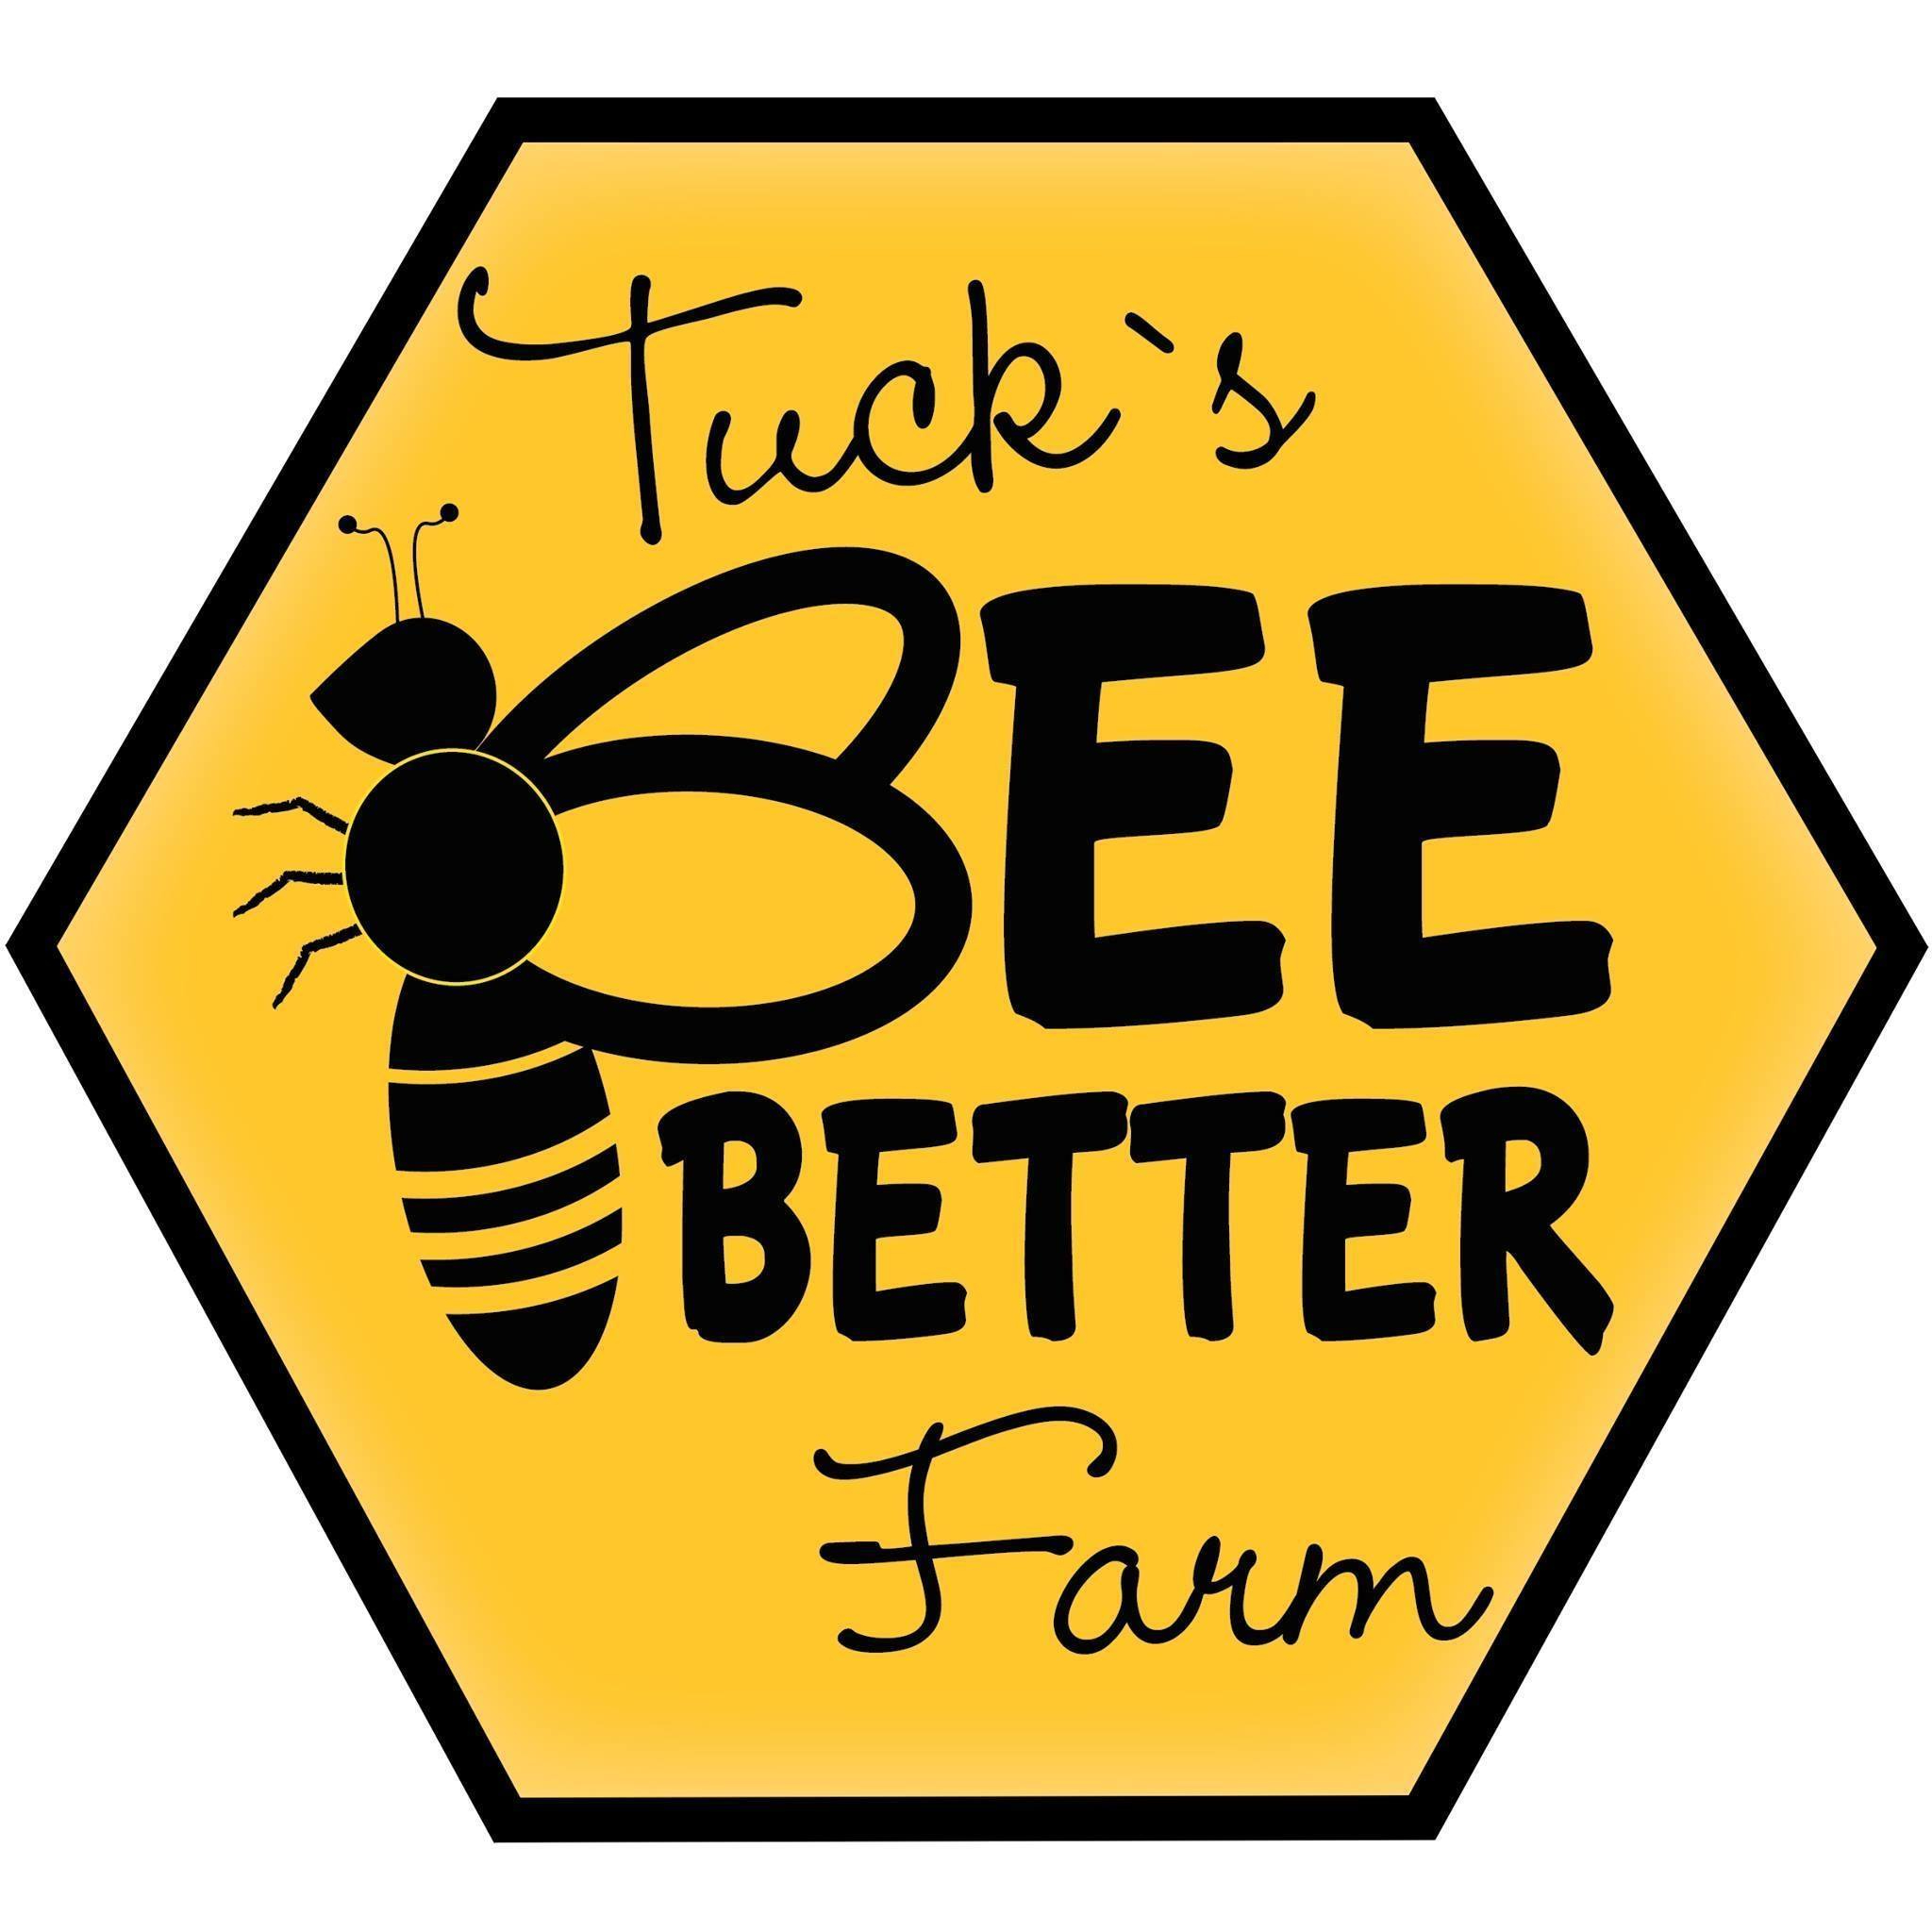 Tuck's Bee Better Farm